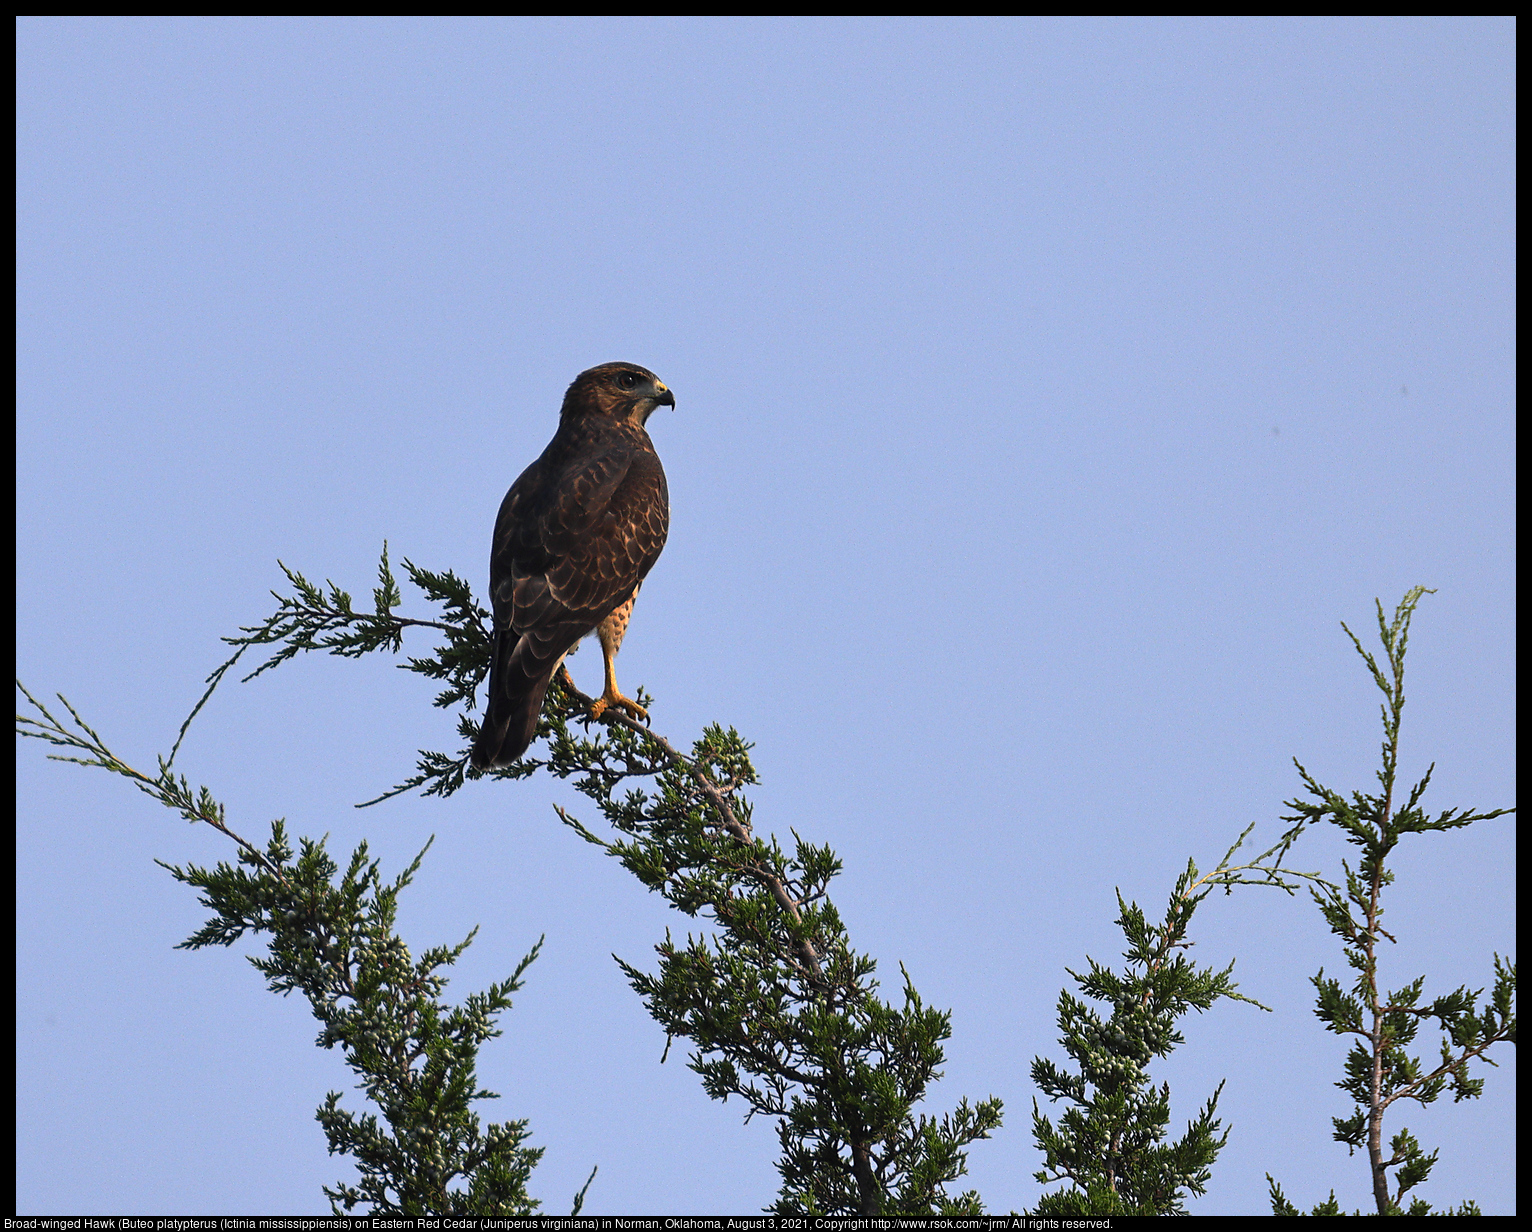 Broad-winged Hawk (Buteo platypterus) on Eastern Red Cedar (Juniperus virginiana) in Norman, Oklahoma, August 3, 2021